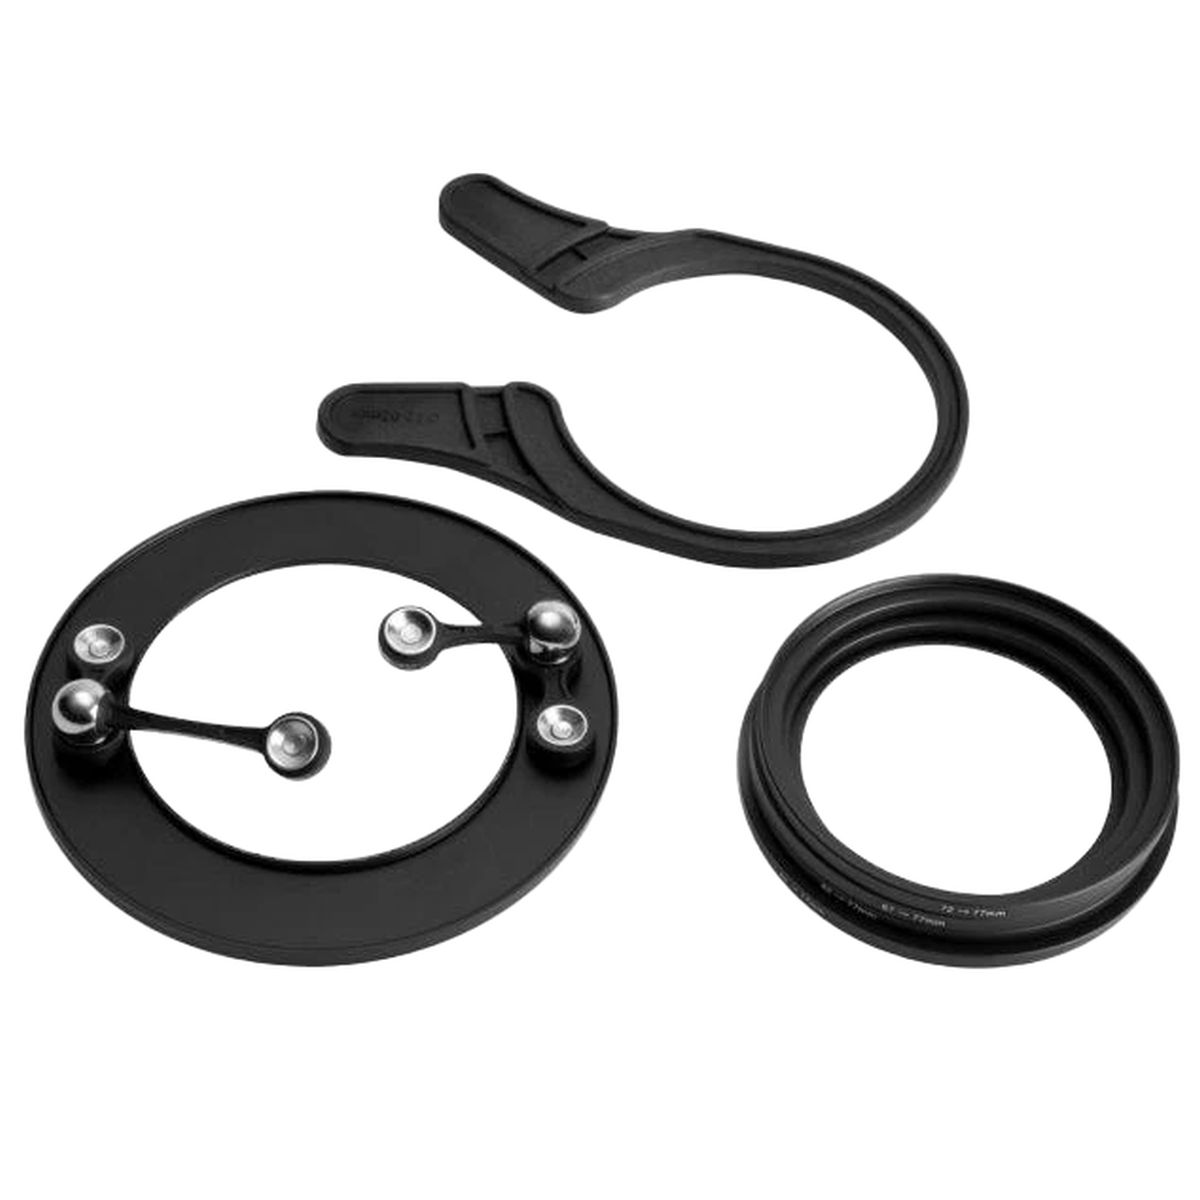 Lensbaby Small OMNI Ring Set